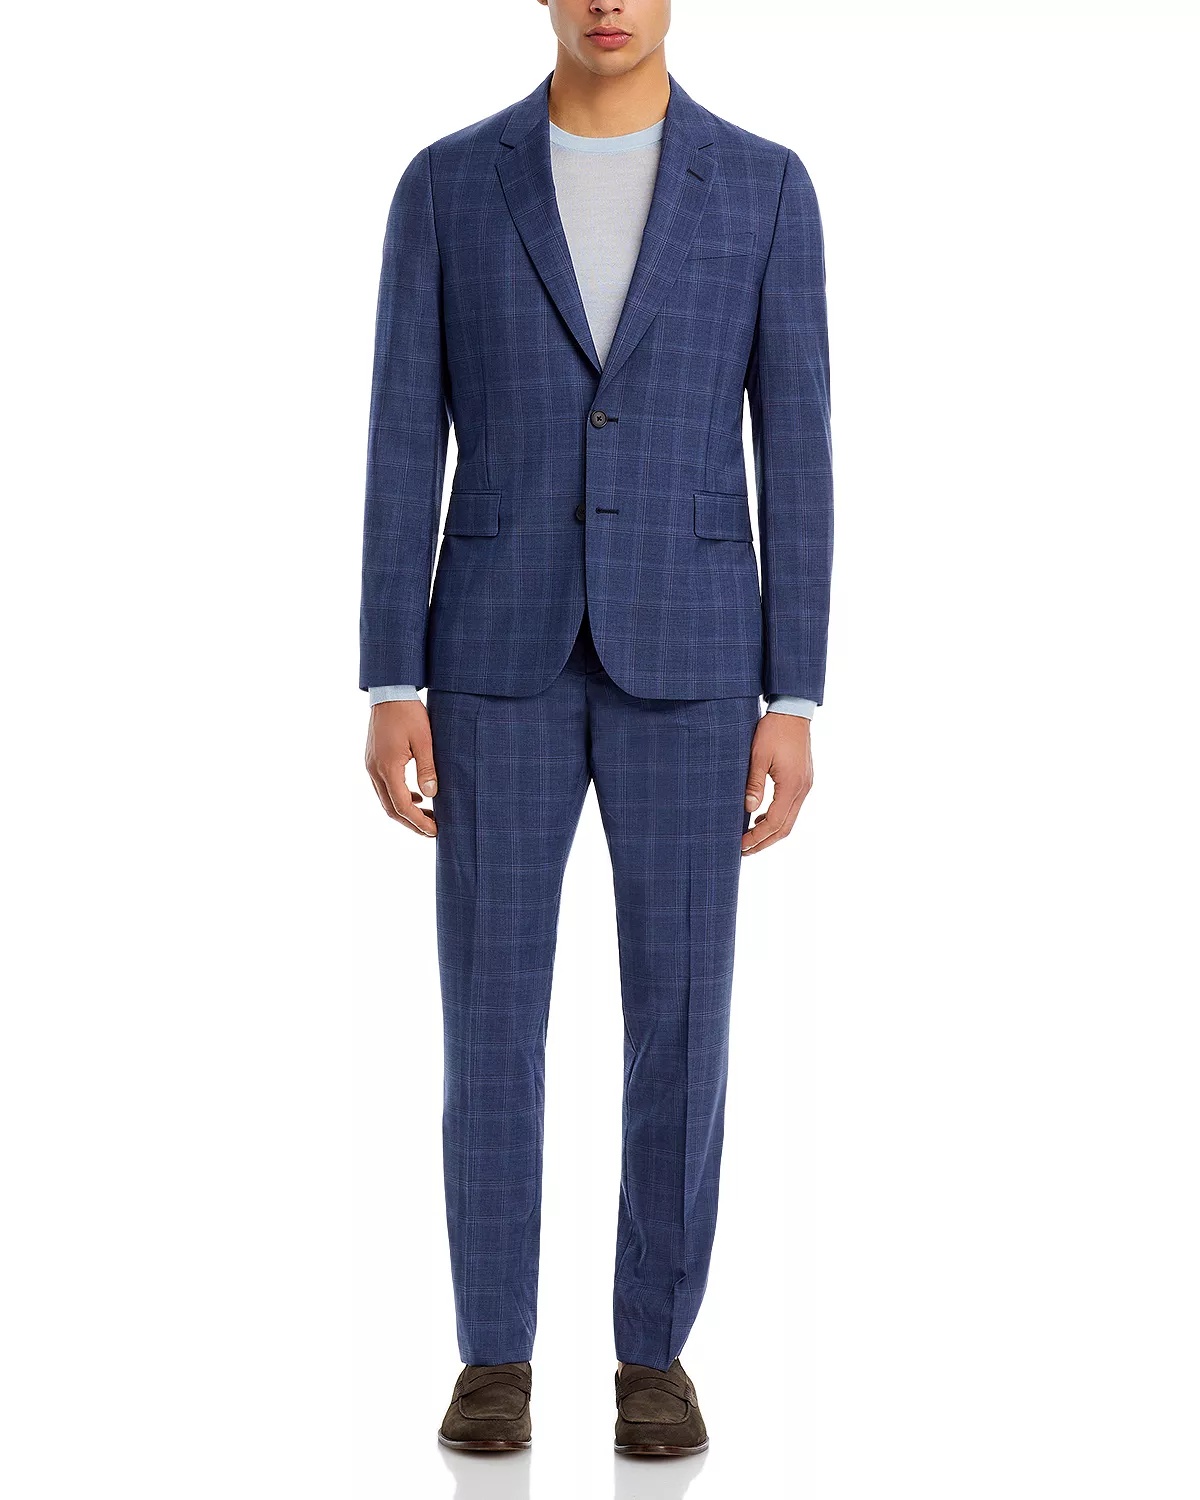 Soho Plaid Extra Slim Fit Suit - 1